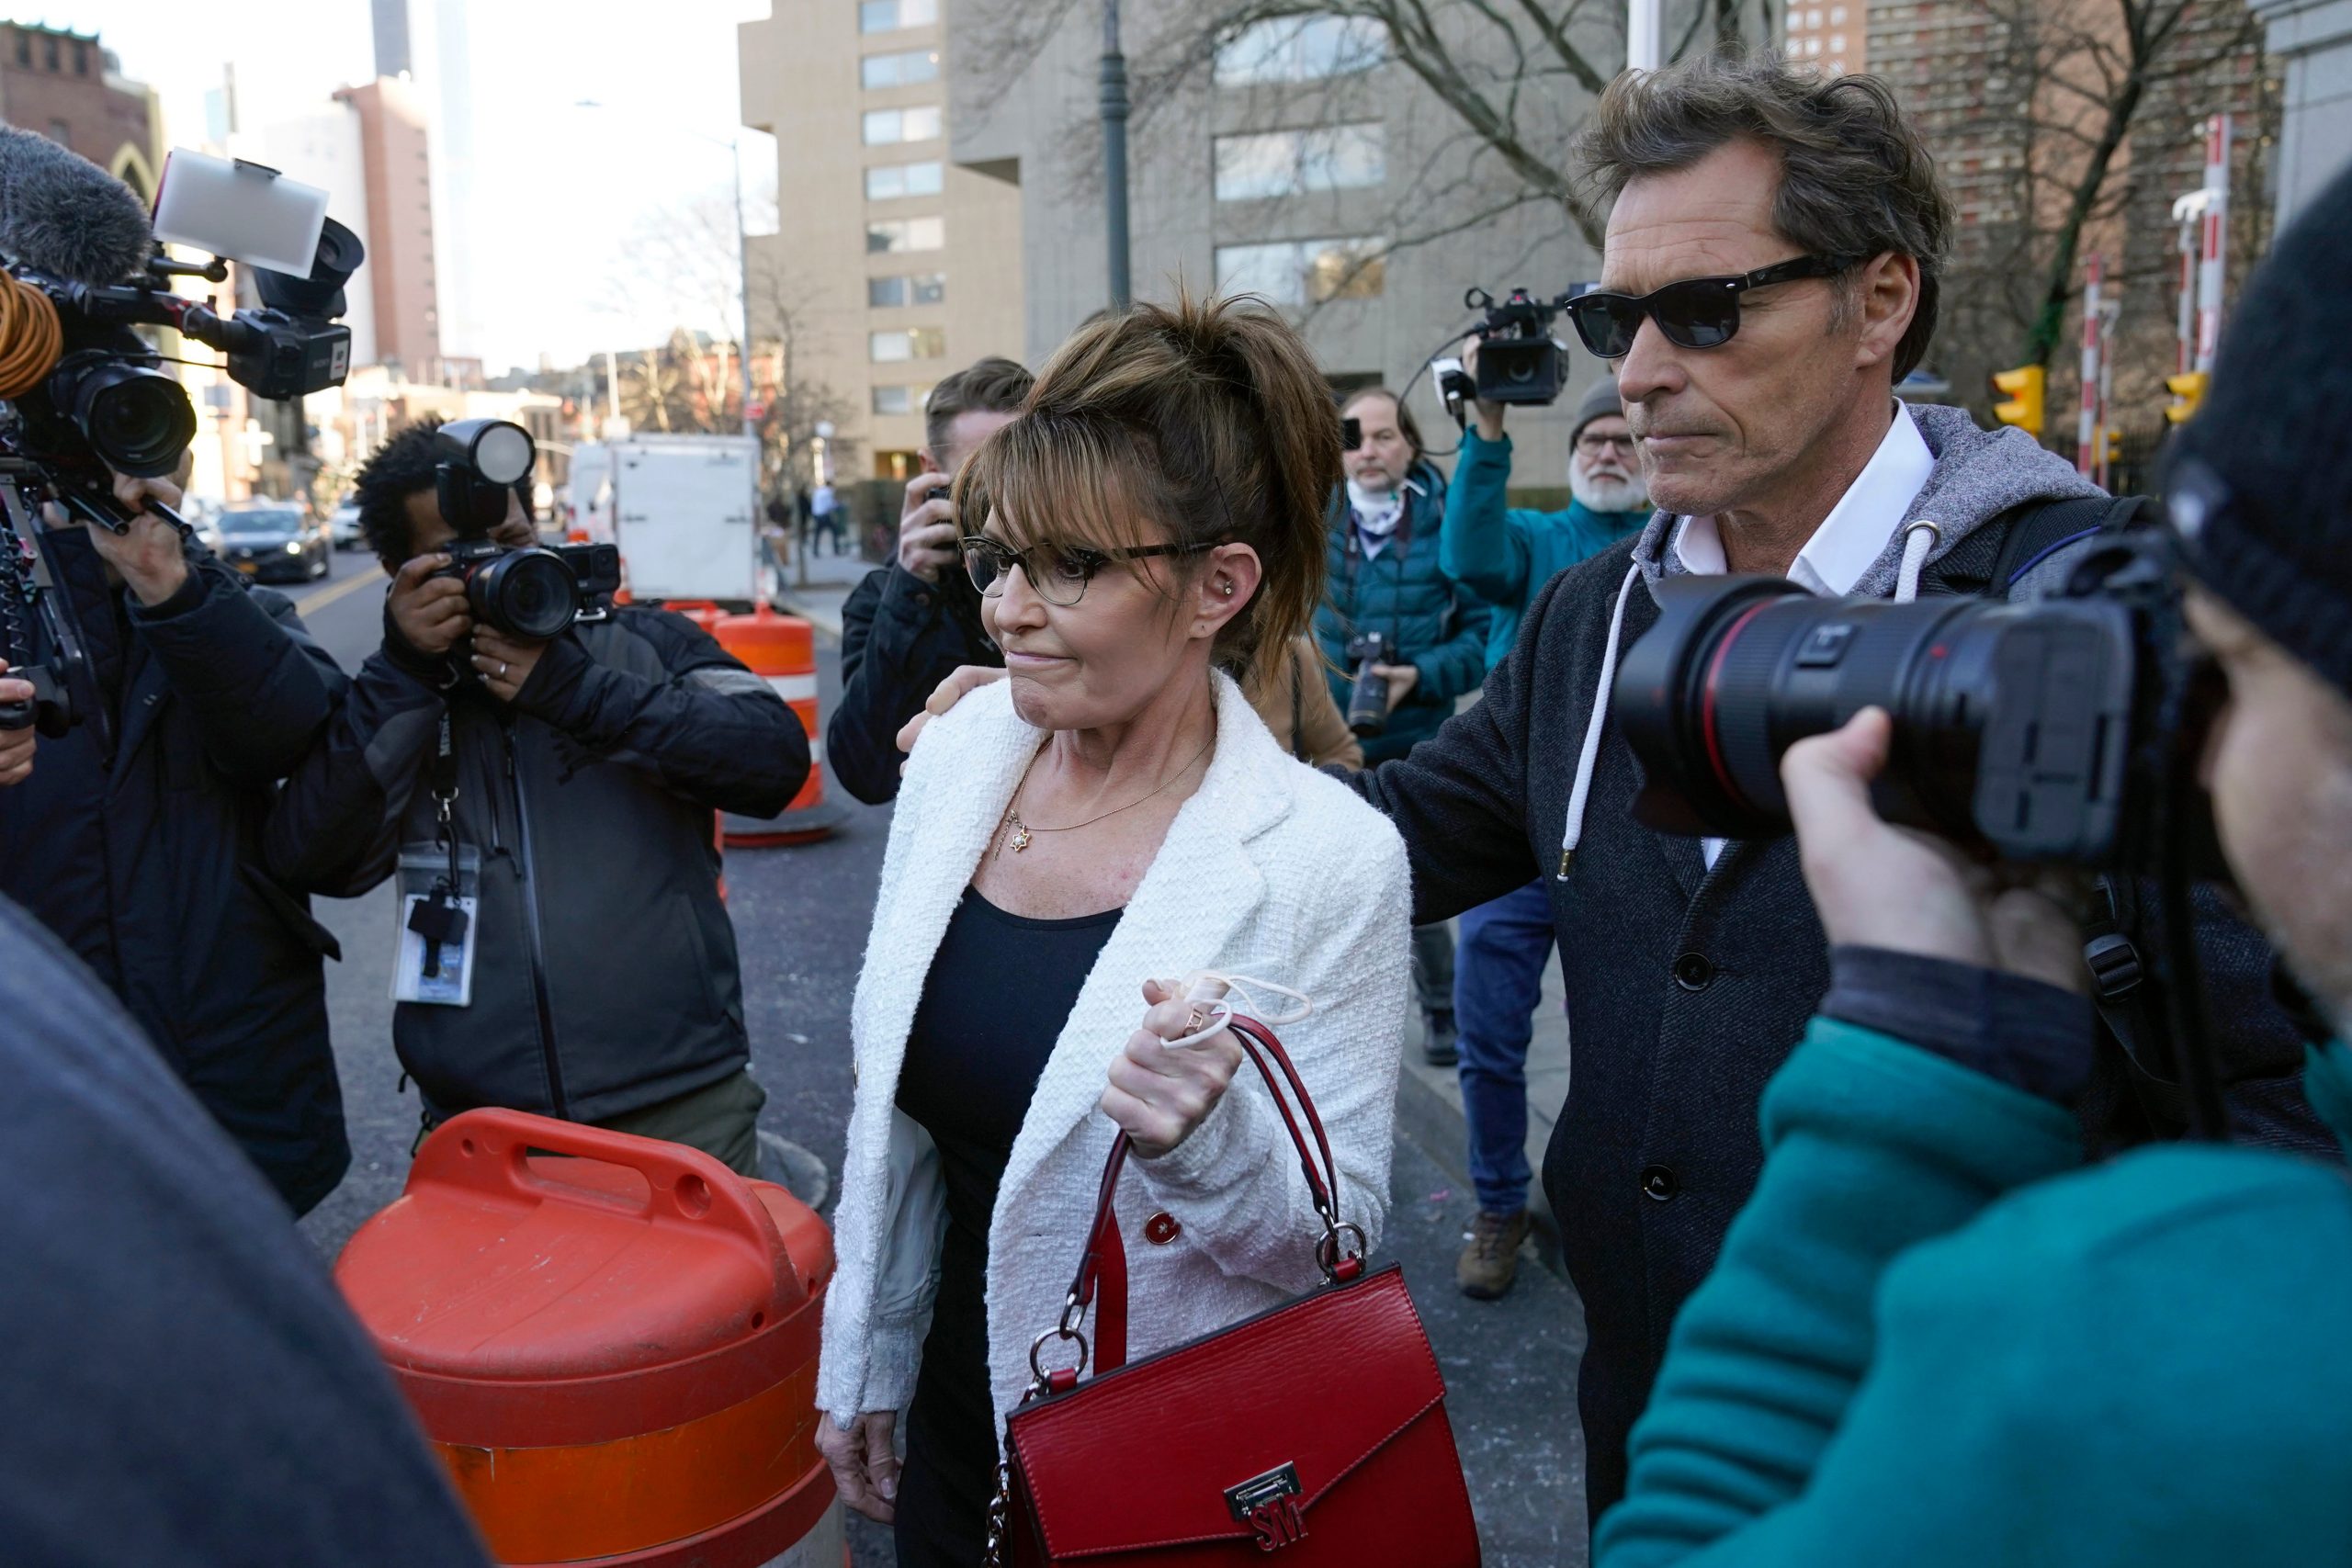 Judge to dismiss Sarah Palin libel lawsuit against New York Times